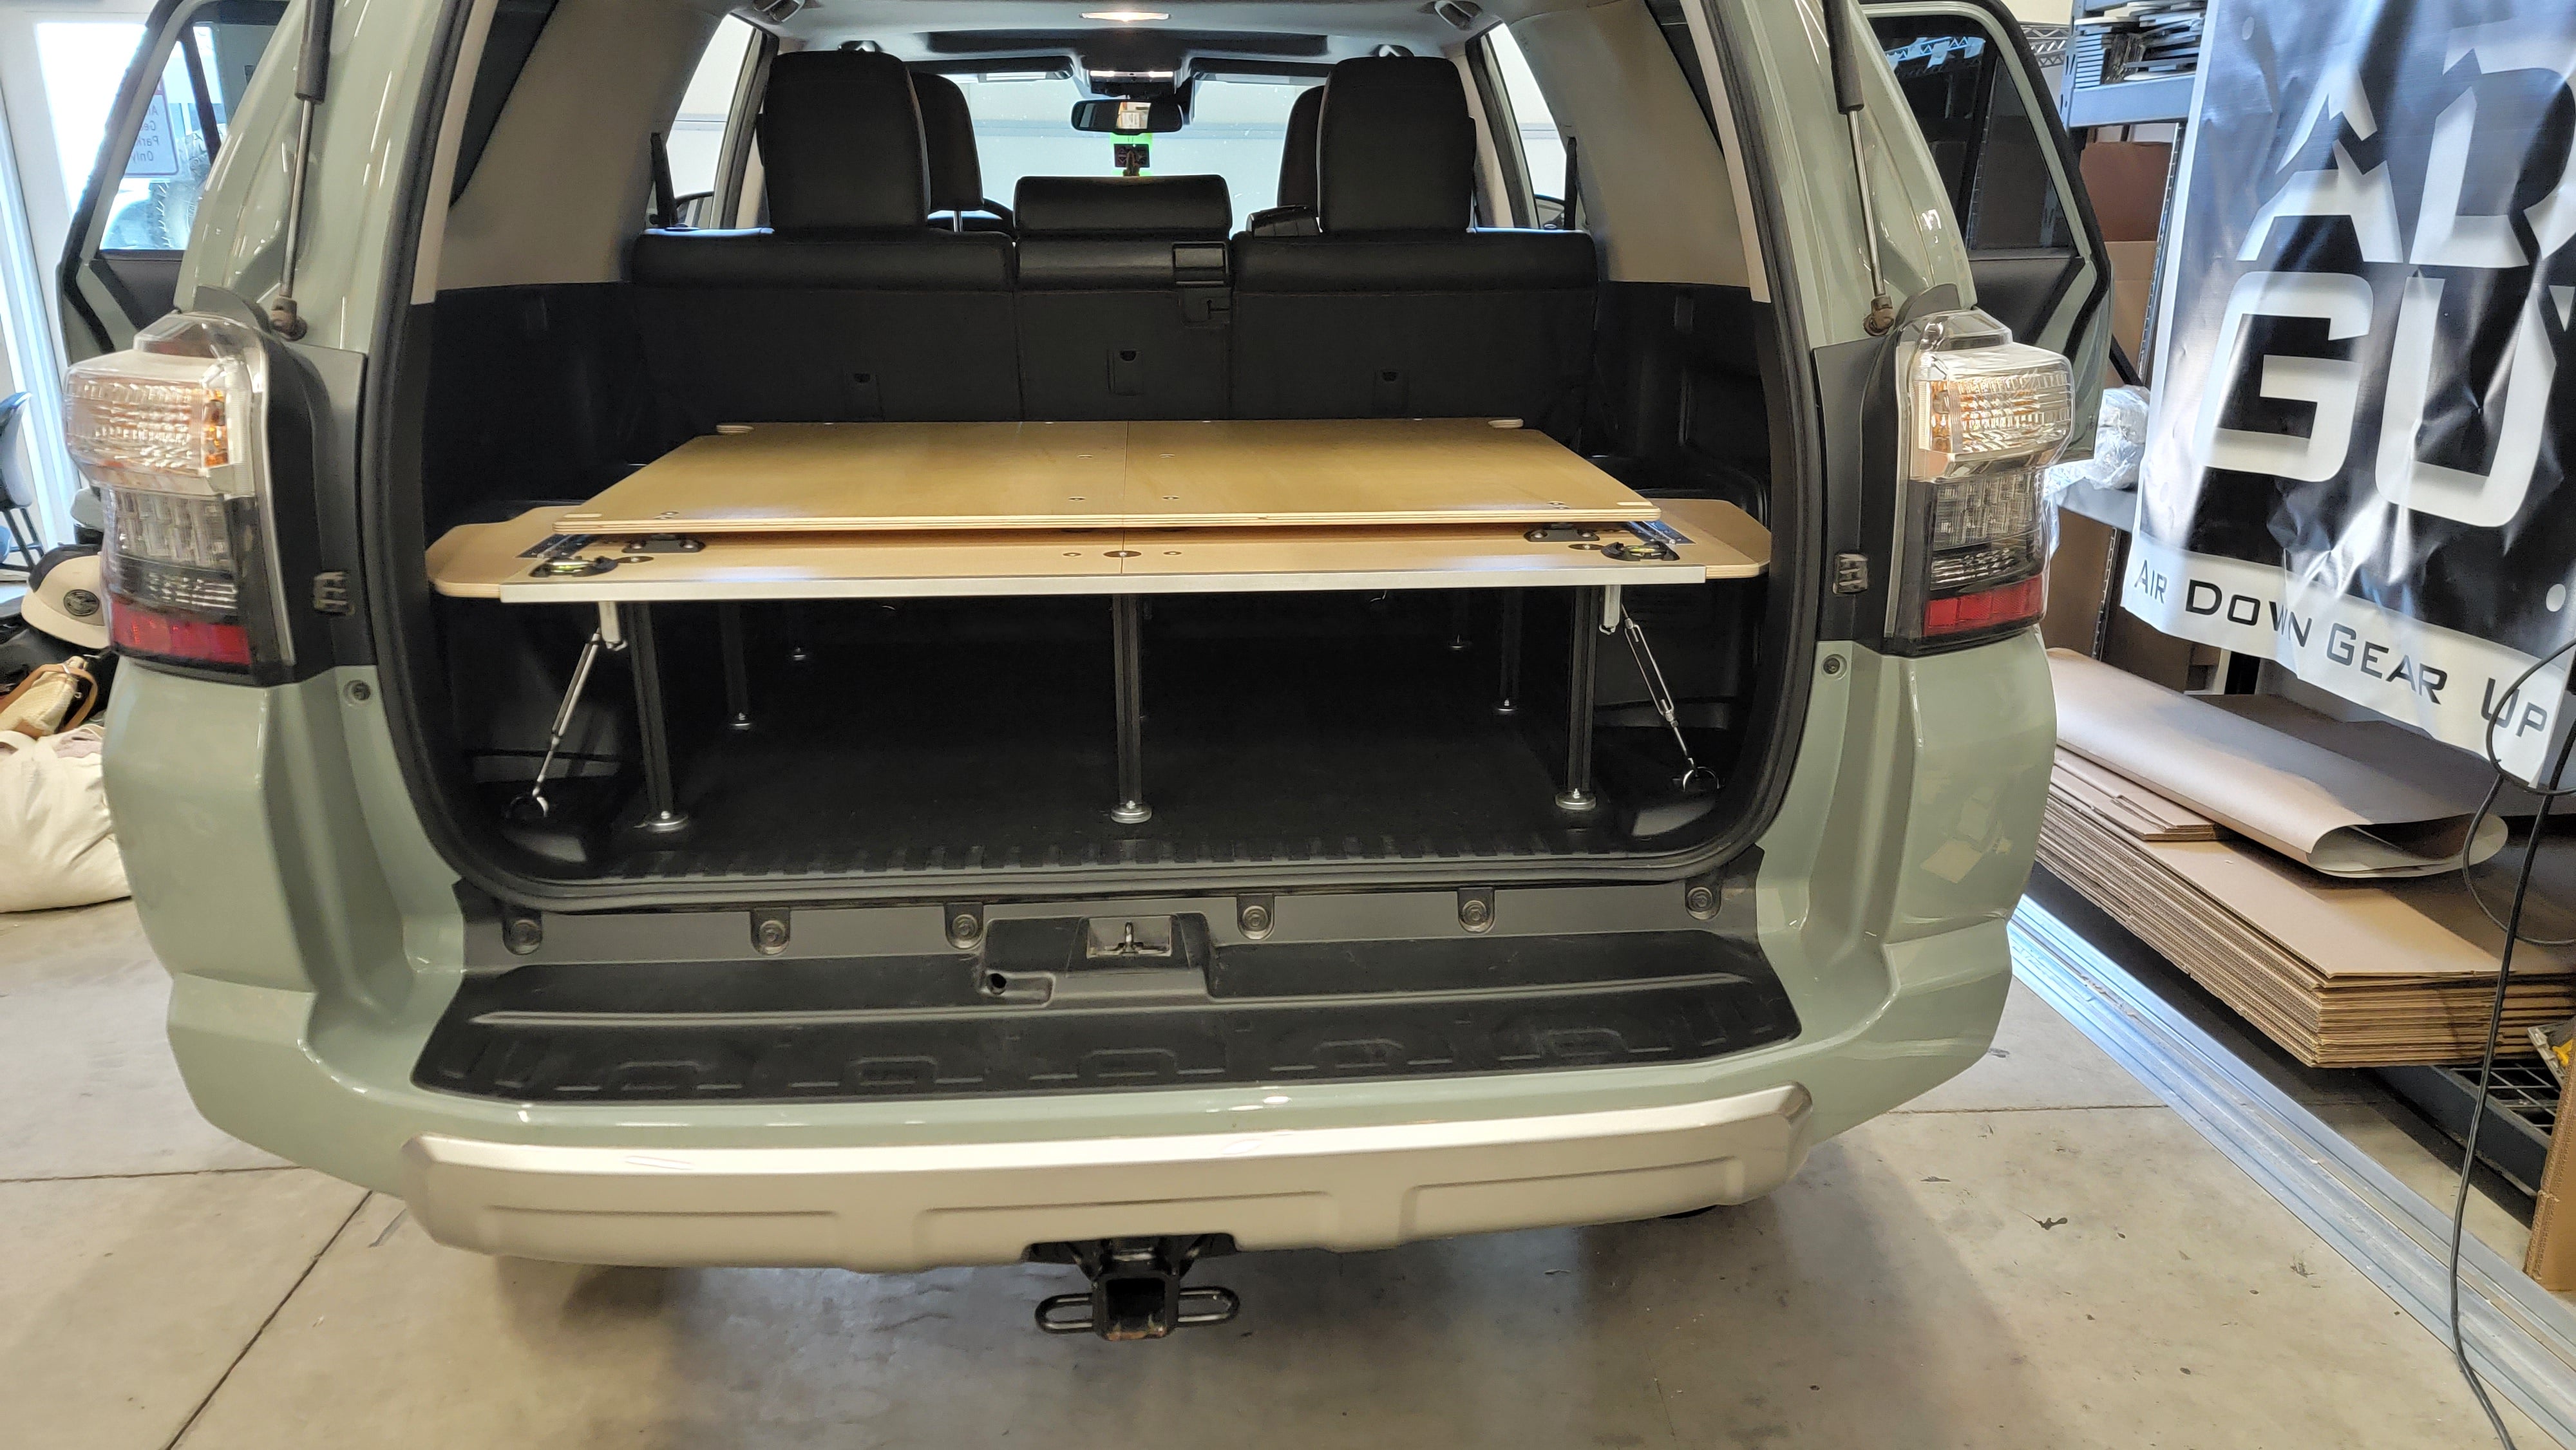 Toyota 4Runner lightweight, patented convertible sleeping platform